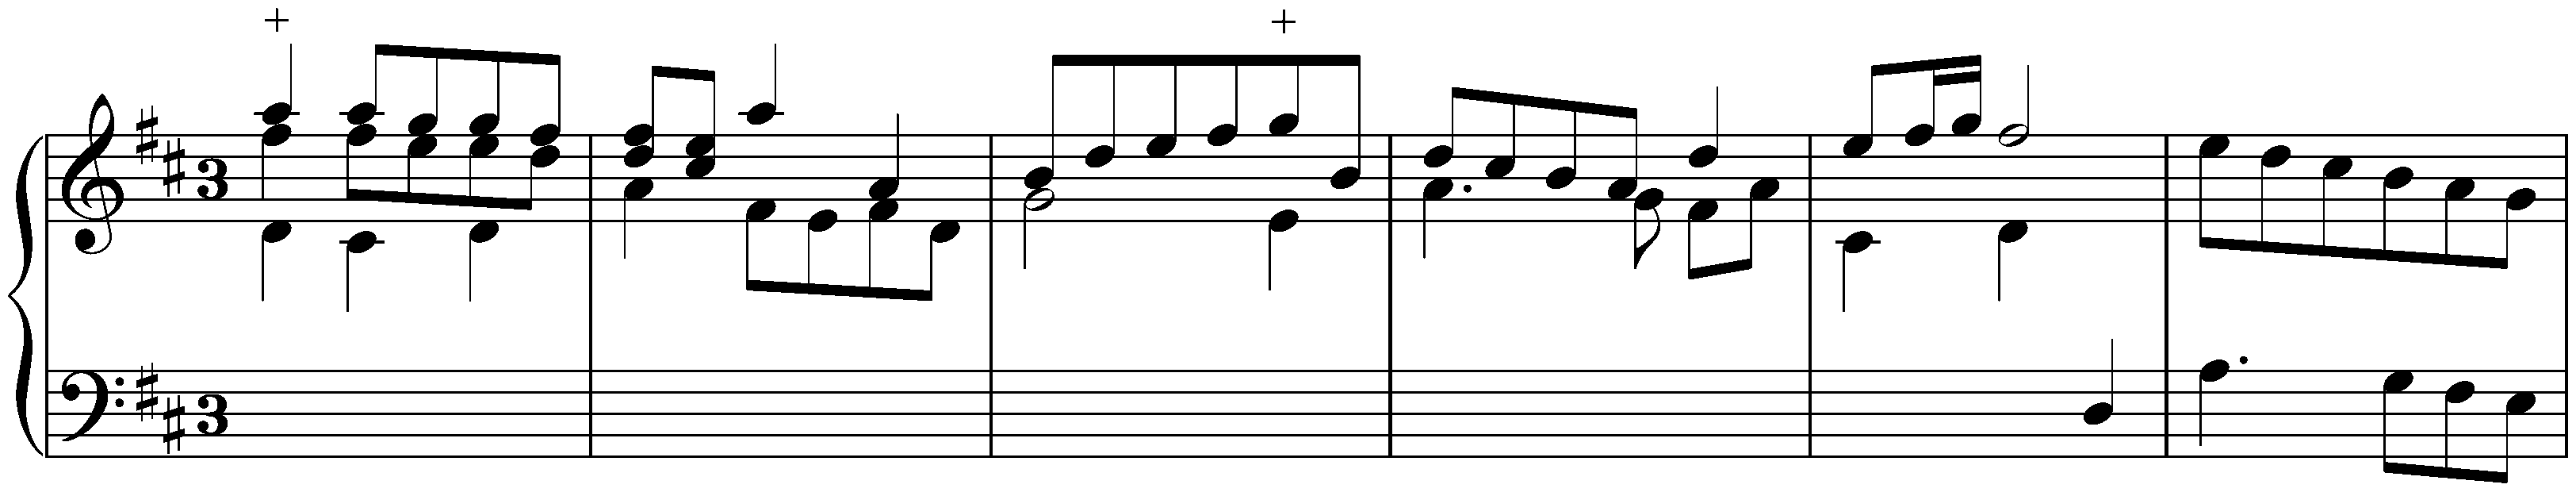 Sonatas found in Paris; 1. D major